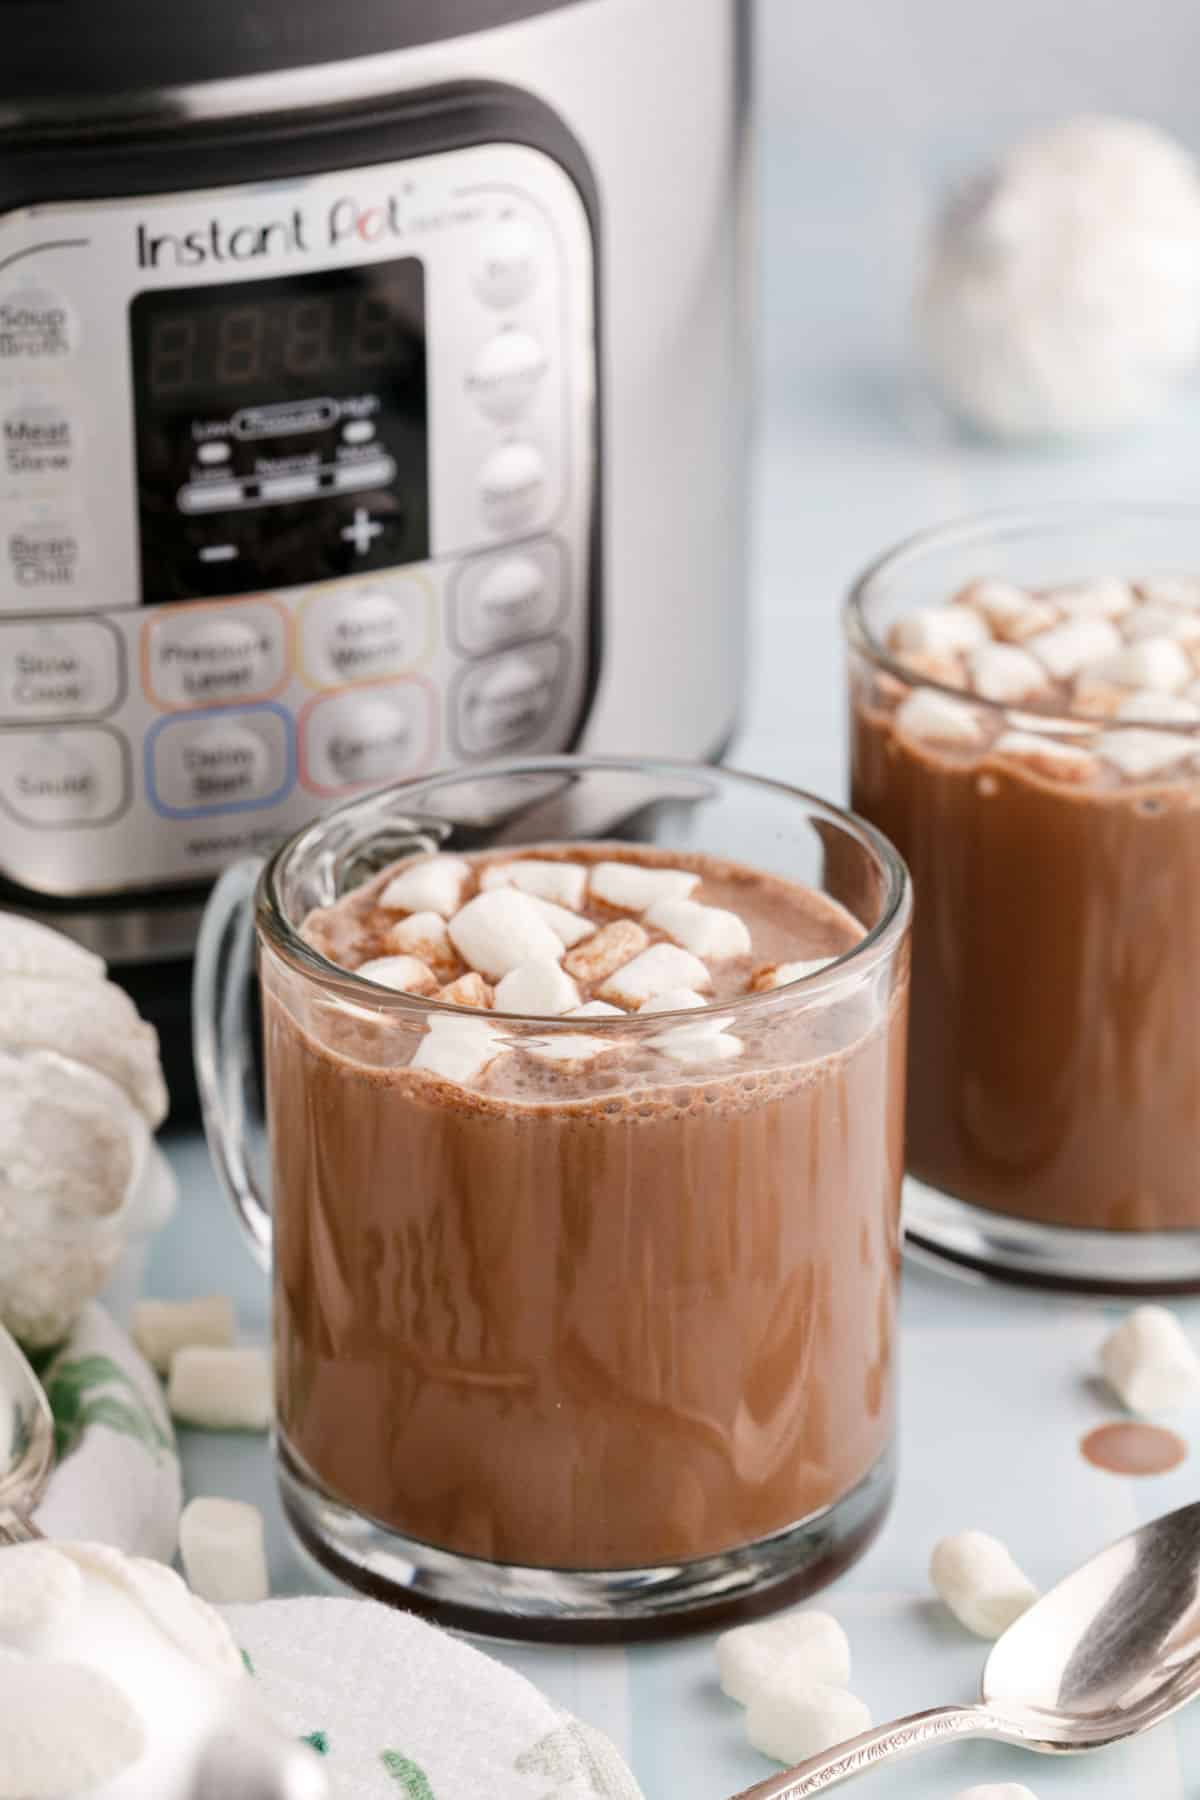 https://www.shugarysweets.com/wp-content/uploads/2021/11/Instant-pot-hot-chocolate-served.jpg